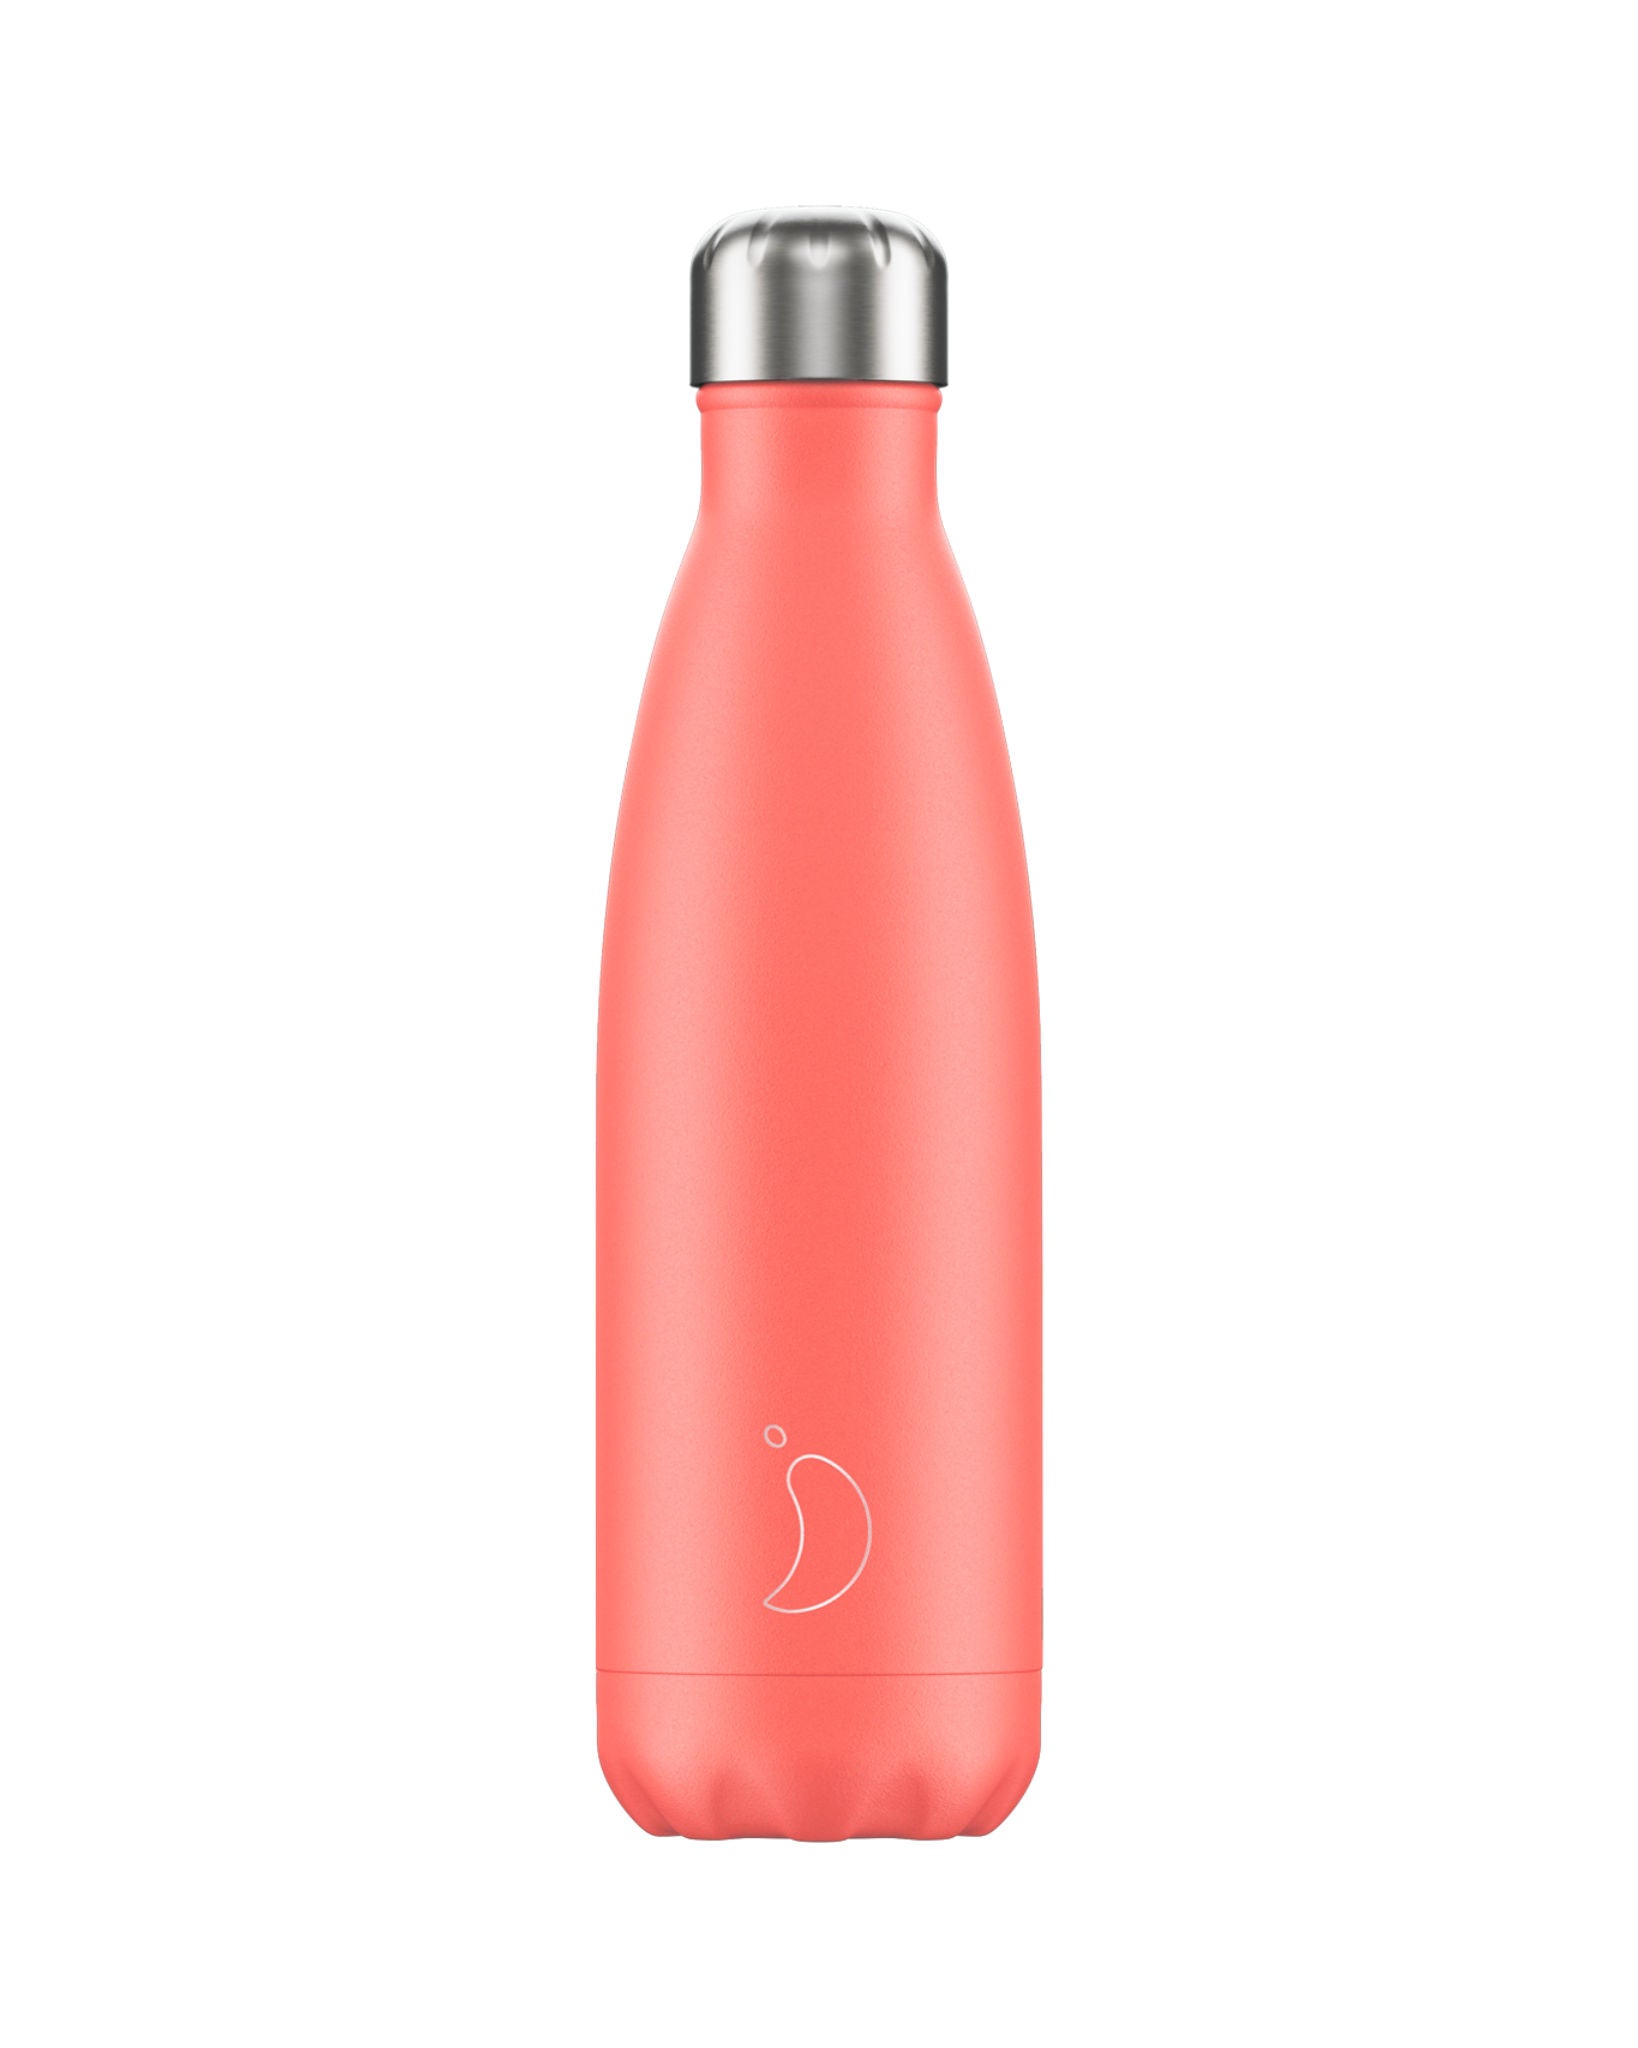 500ml Bottle - Pastel - Coral